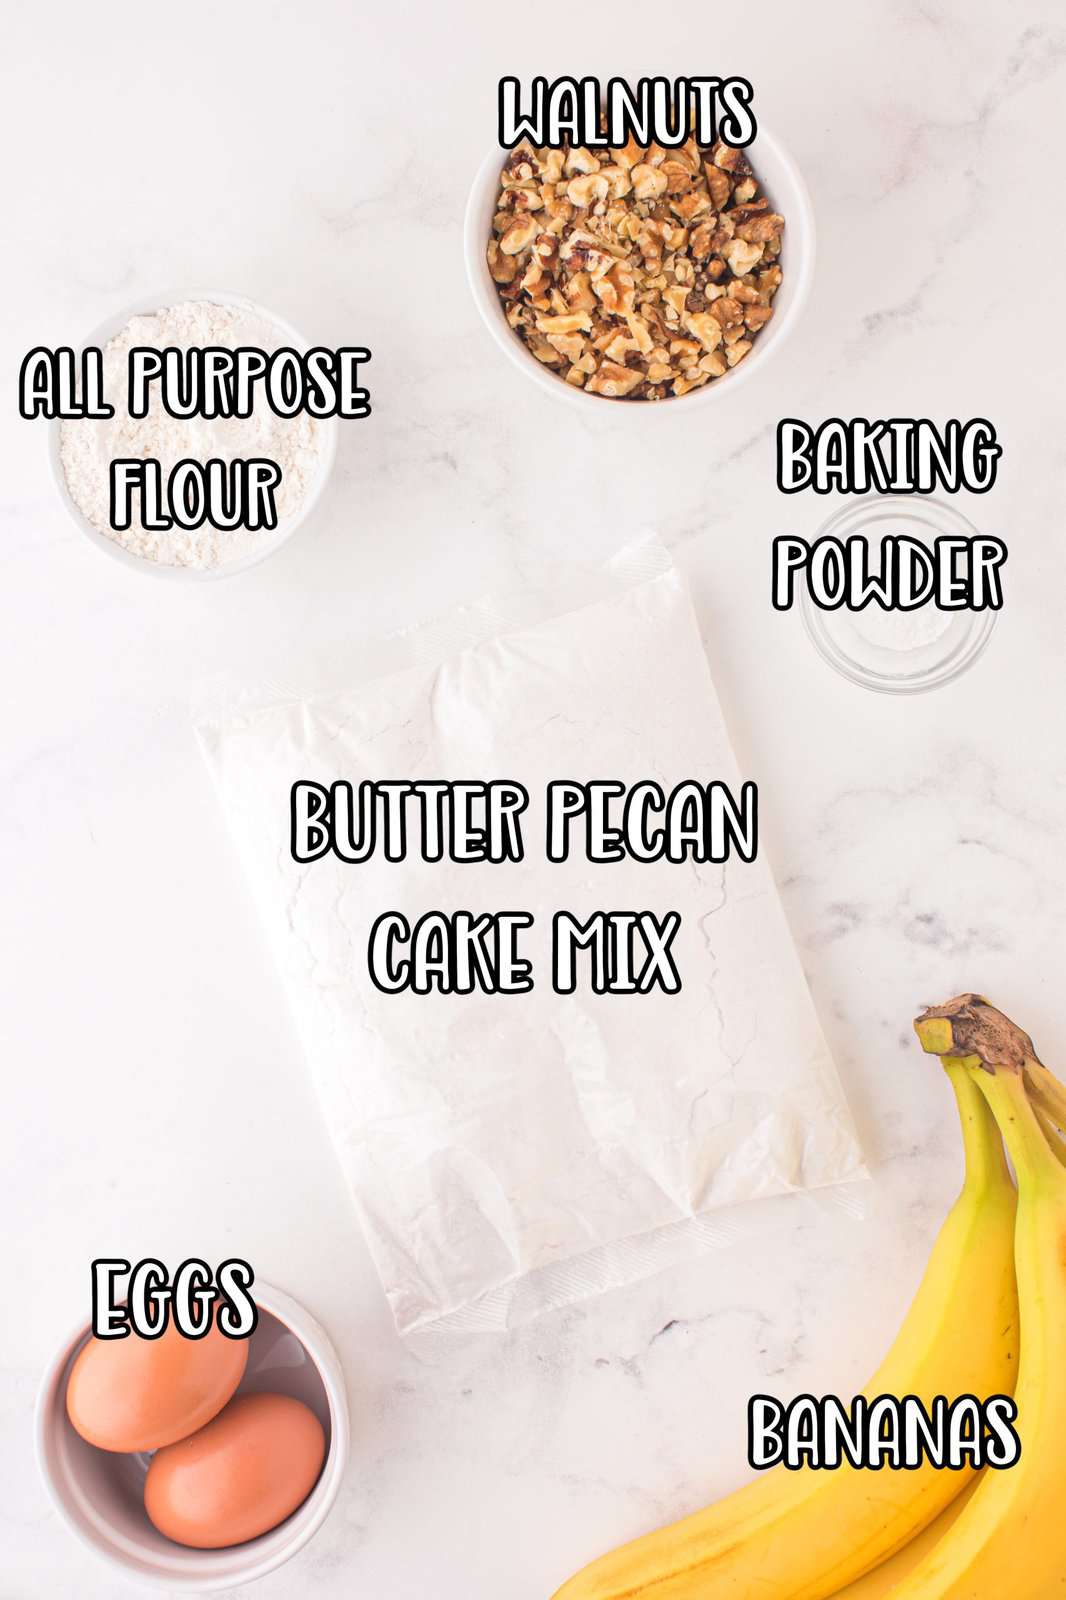 Pecan cake mix, walnuts, large eggs, all purpose flour, baking powder, and ripe bananas.